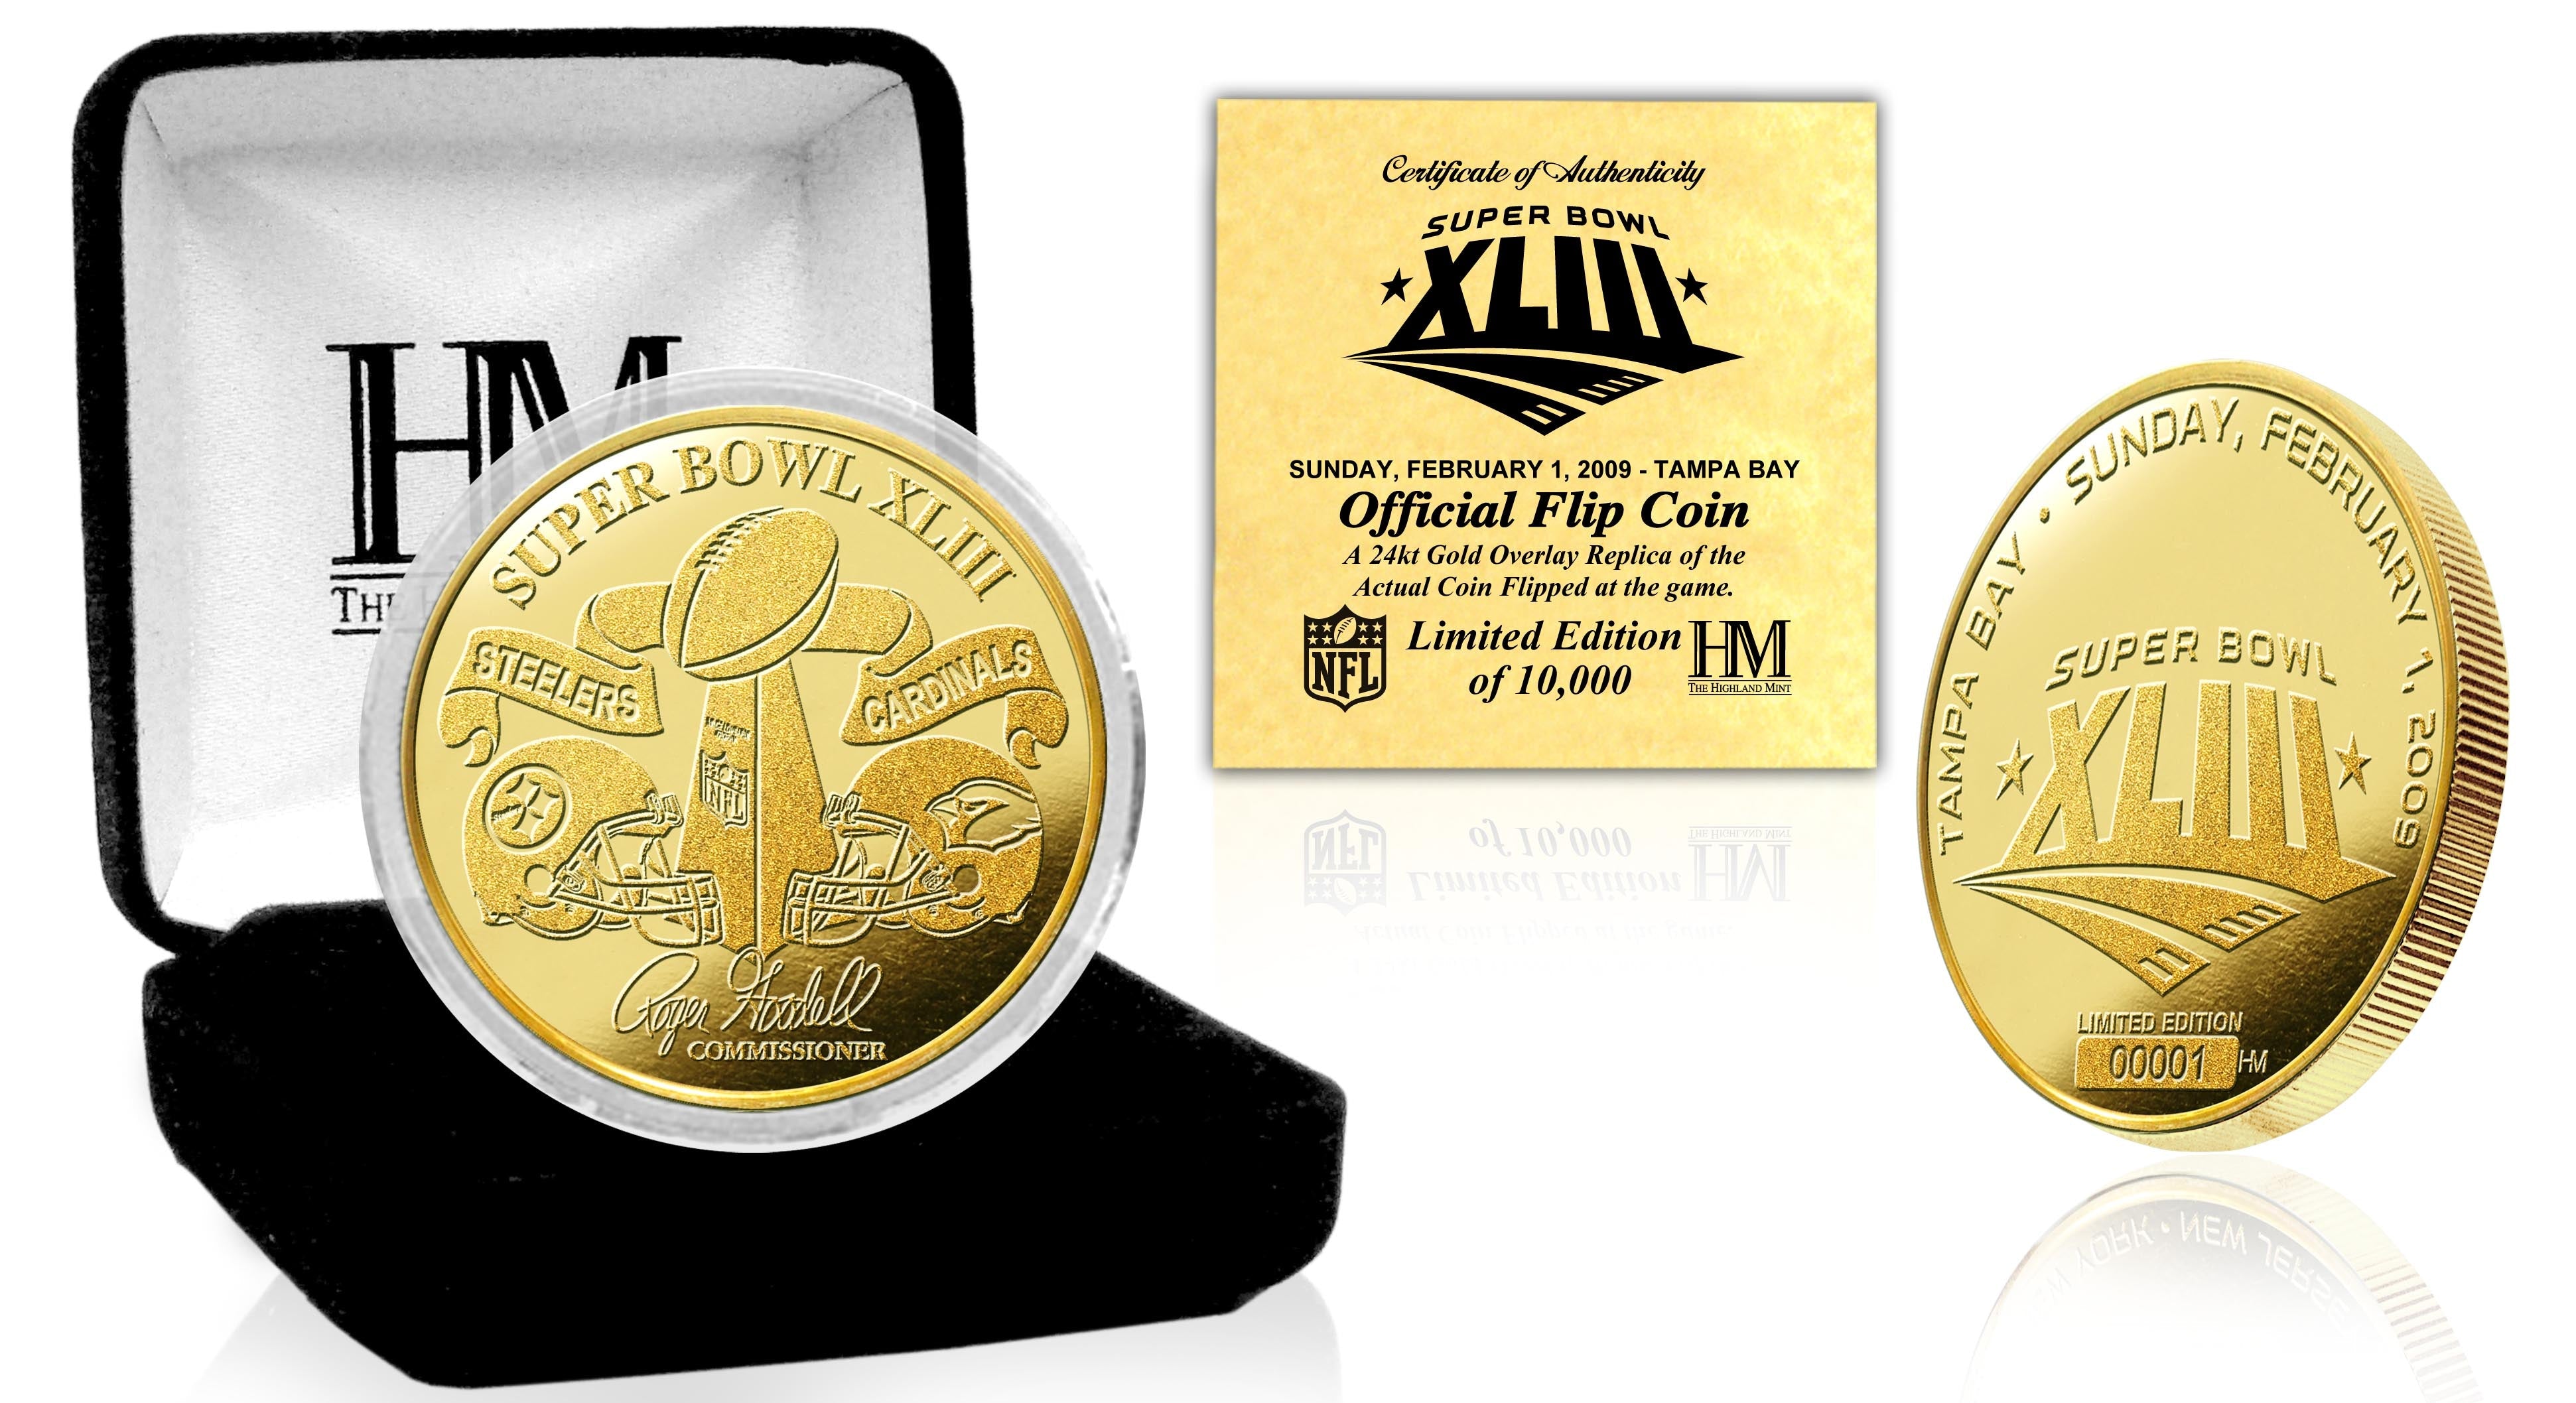 Super Bowl XLIII Flip Coin